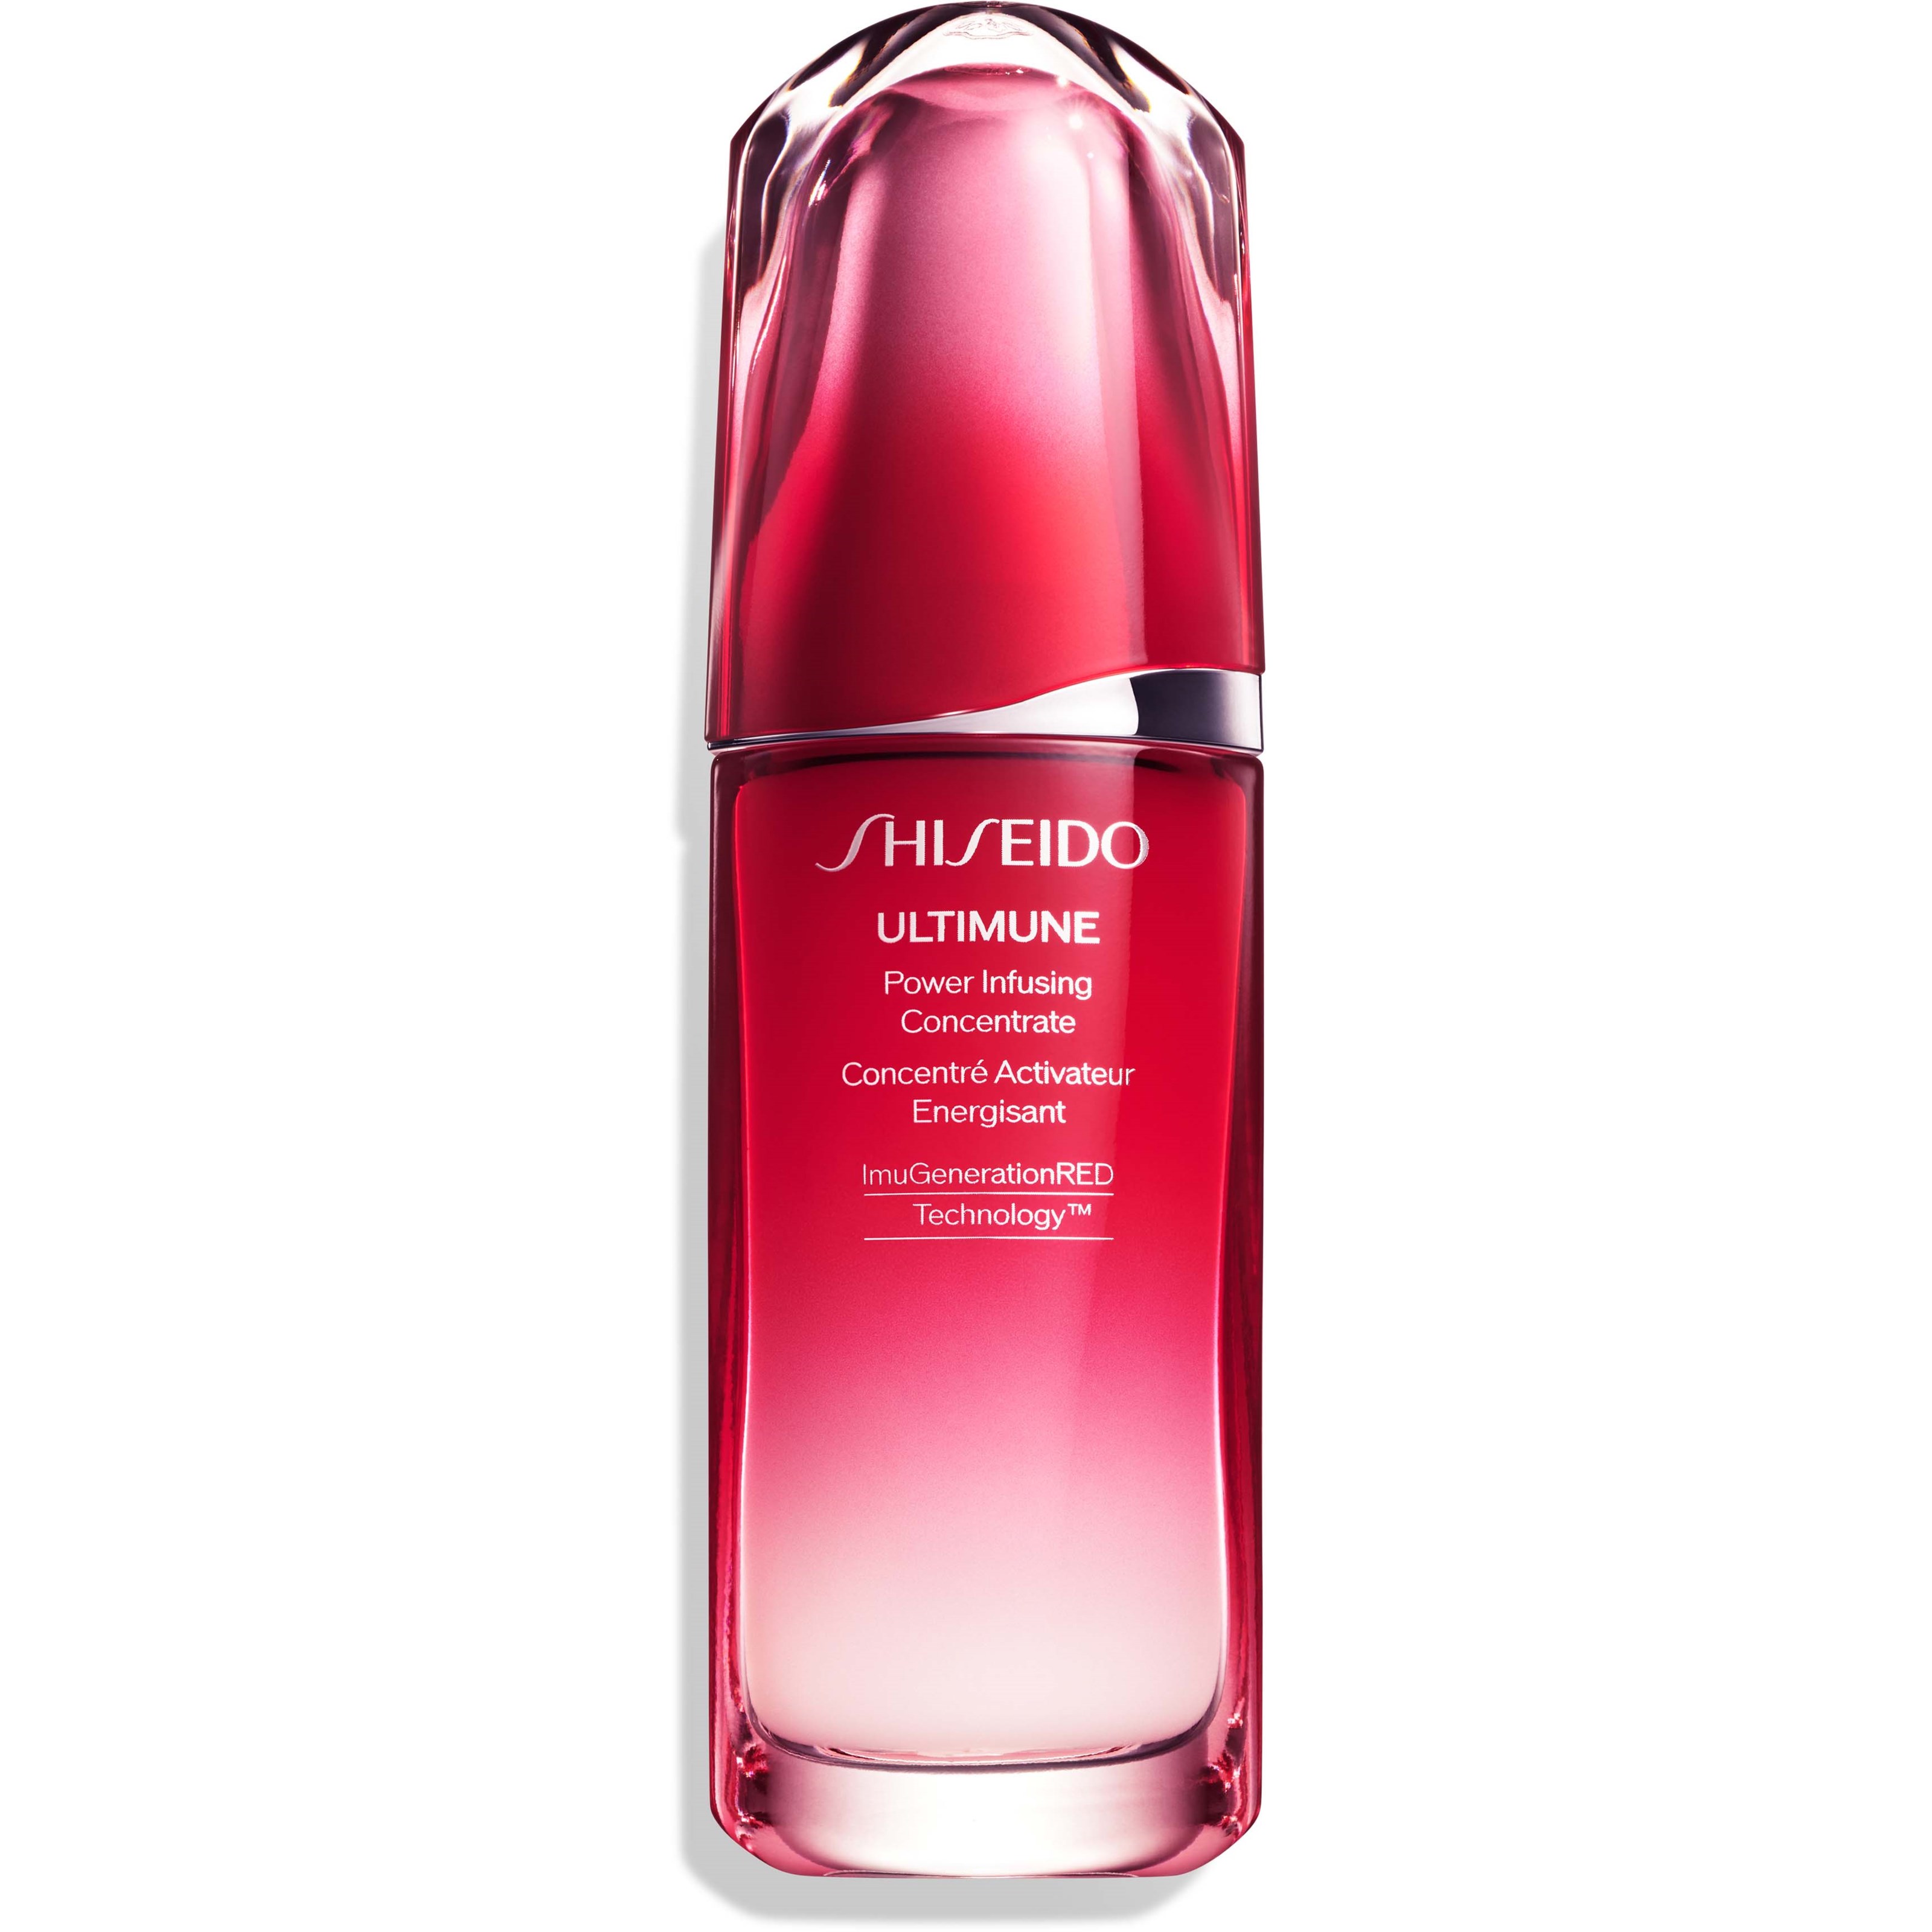 Zdjęcia - Kremy i toniki Shiseido Ultimune 3.0 Power Infusing Concentrate 75 ml 